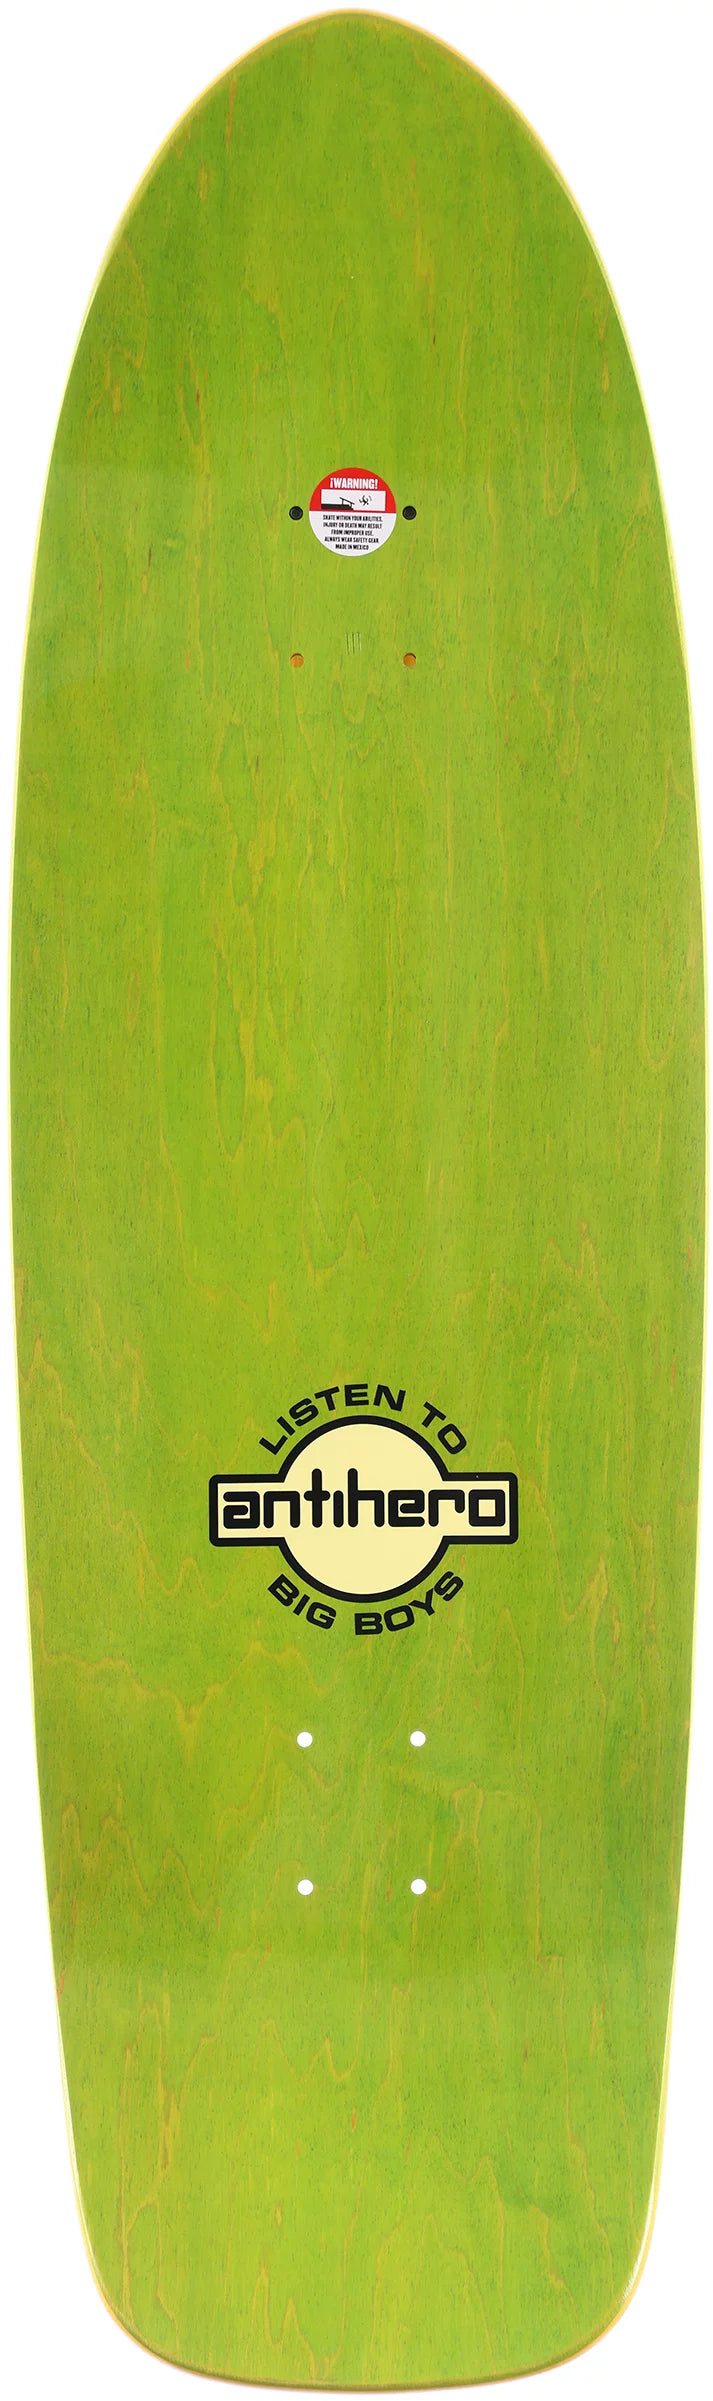 ANTIHERO DECK RANEY BIG BORD YELLOW (10.125") - The Drive Skateshop